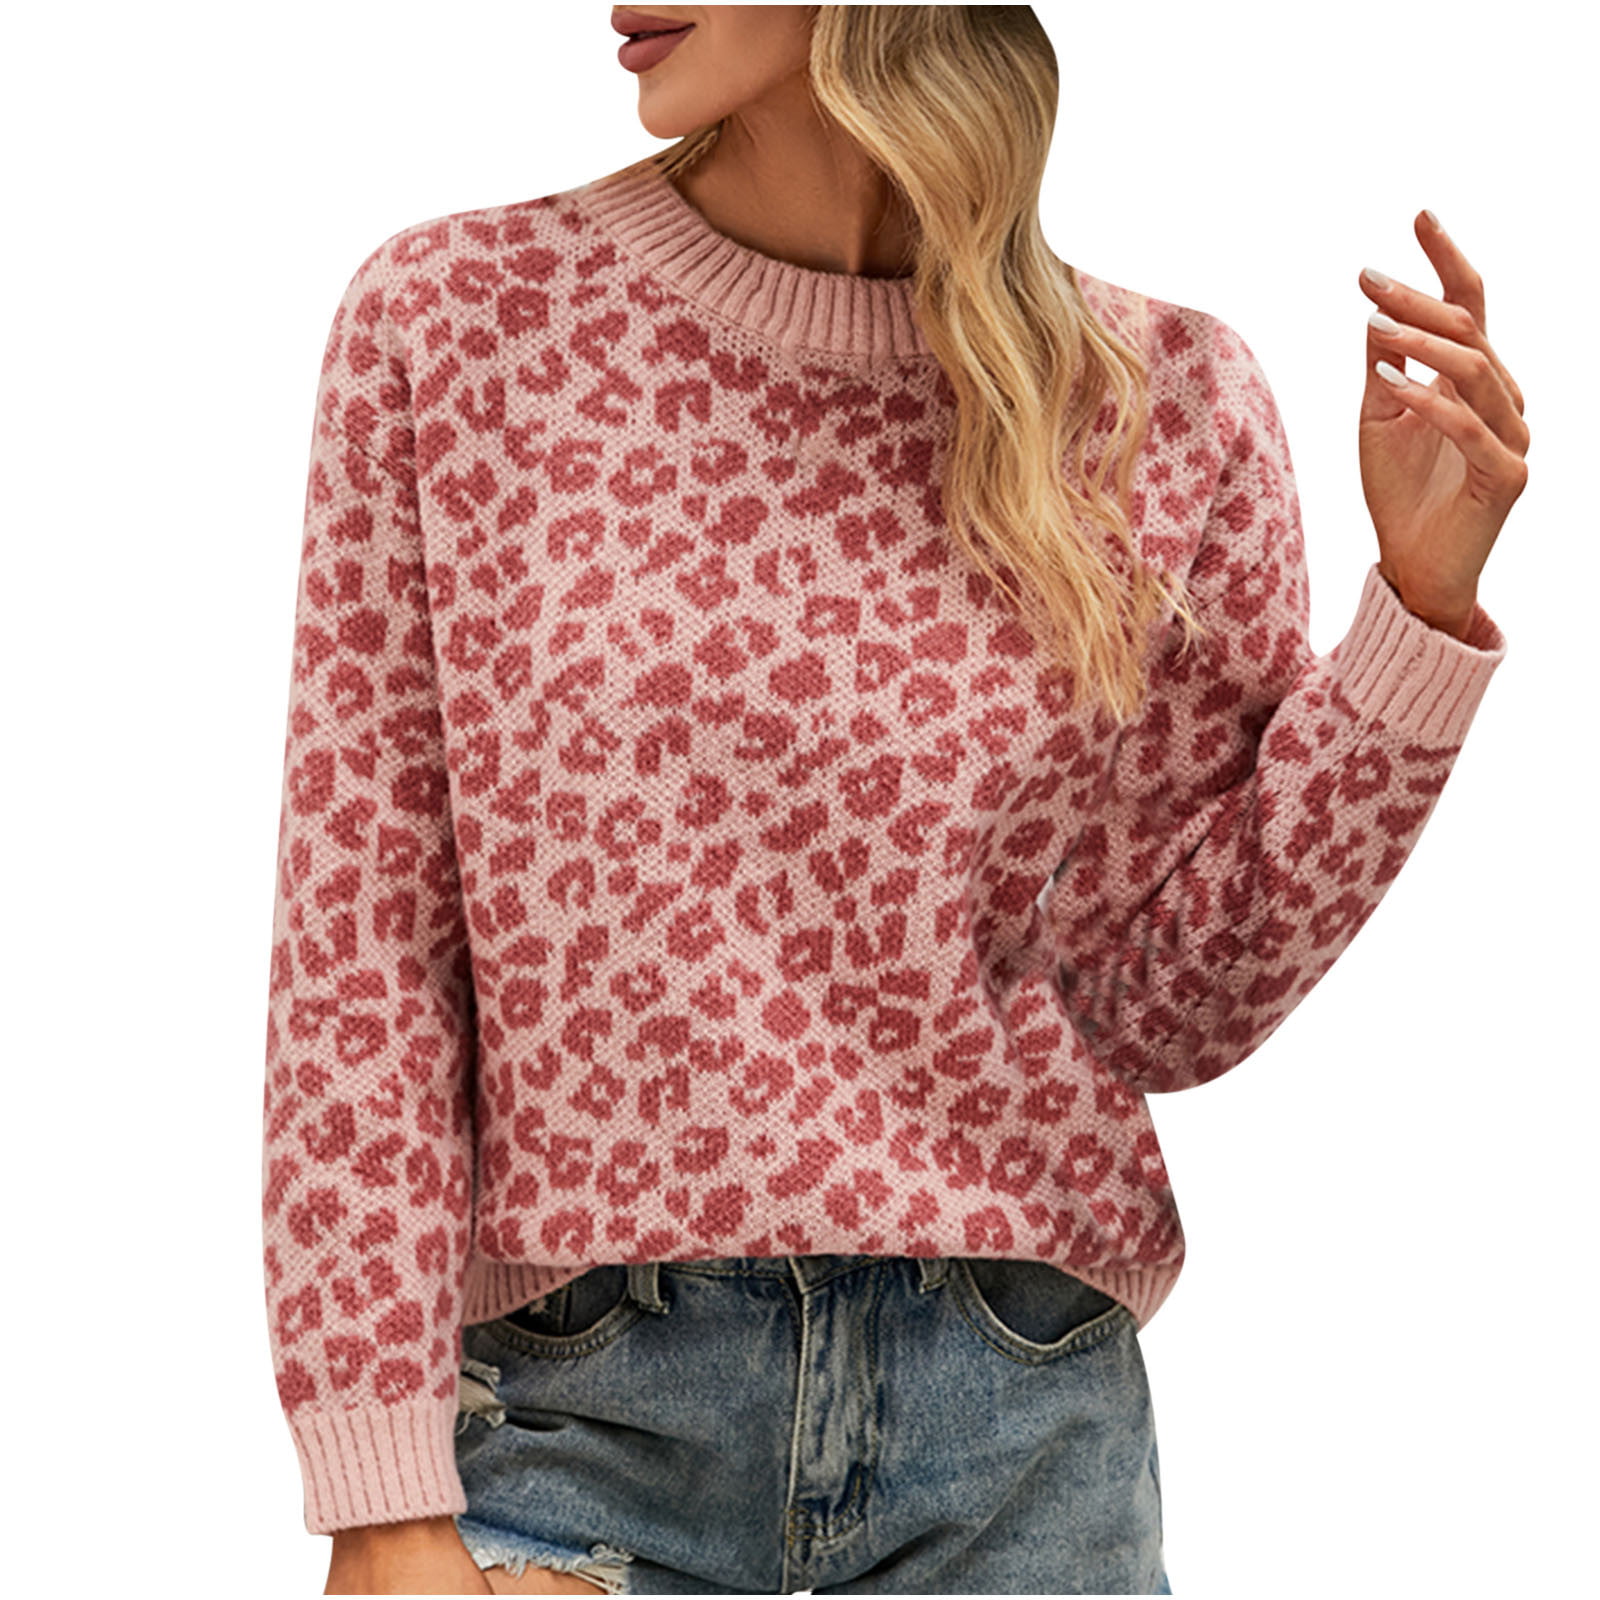 nogle få Skov Spekulerer QUYUON Sweater For Women Casual Hot Pink Sweater Women Leopard Print Sweatshirt  Pullover Long Sleeve Shirt Tops Blouse Ladies Crew Neck Sweater M -  Walmart.com